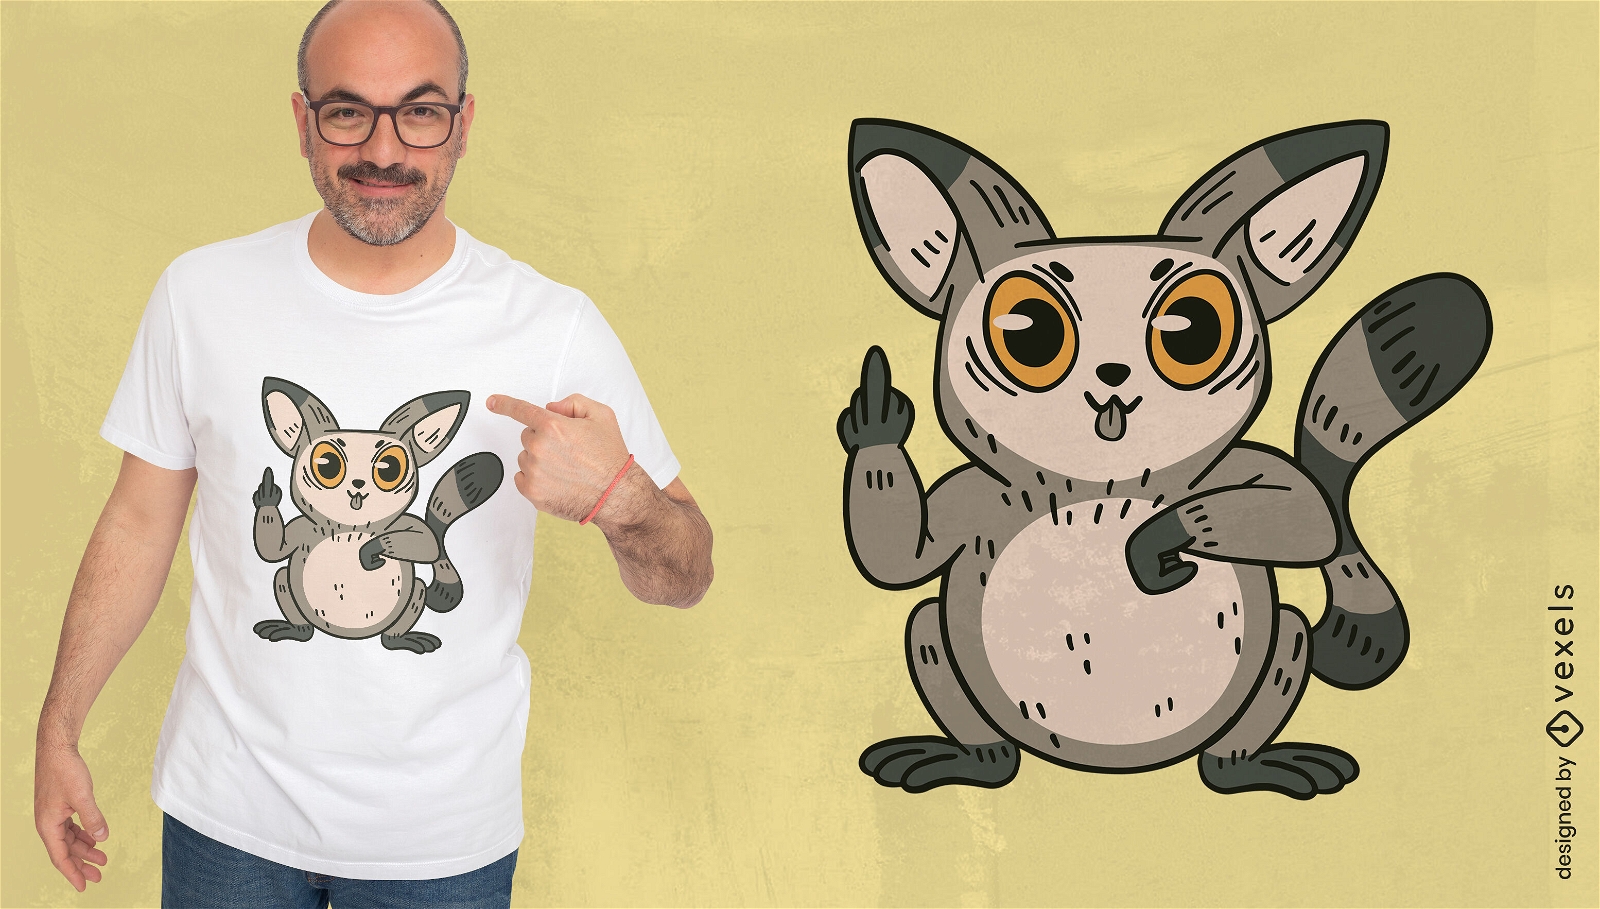 Lemur animal funny gesture t-shirt design